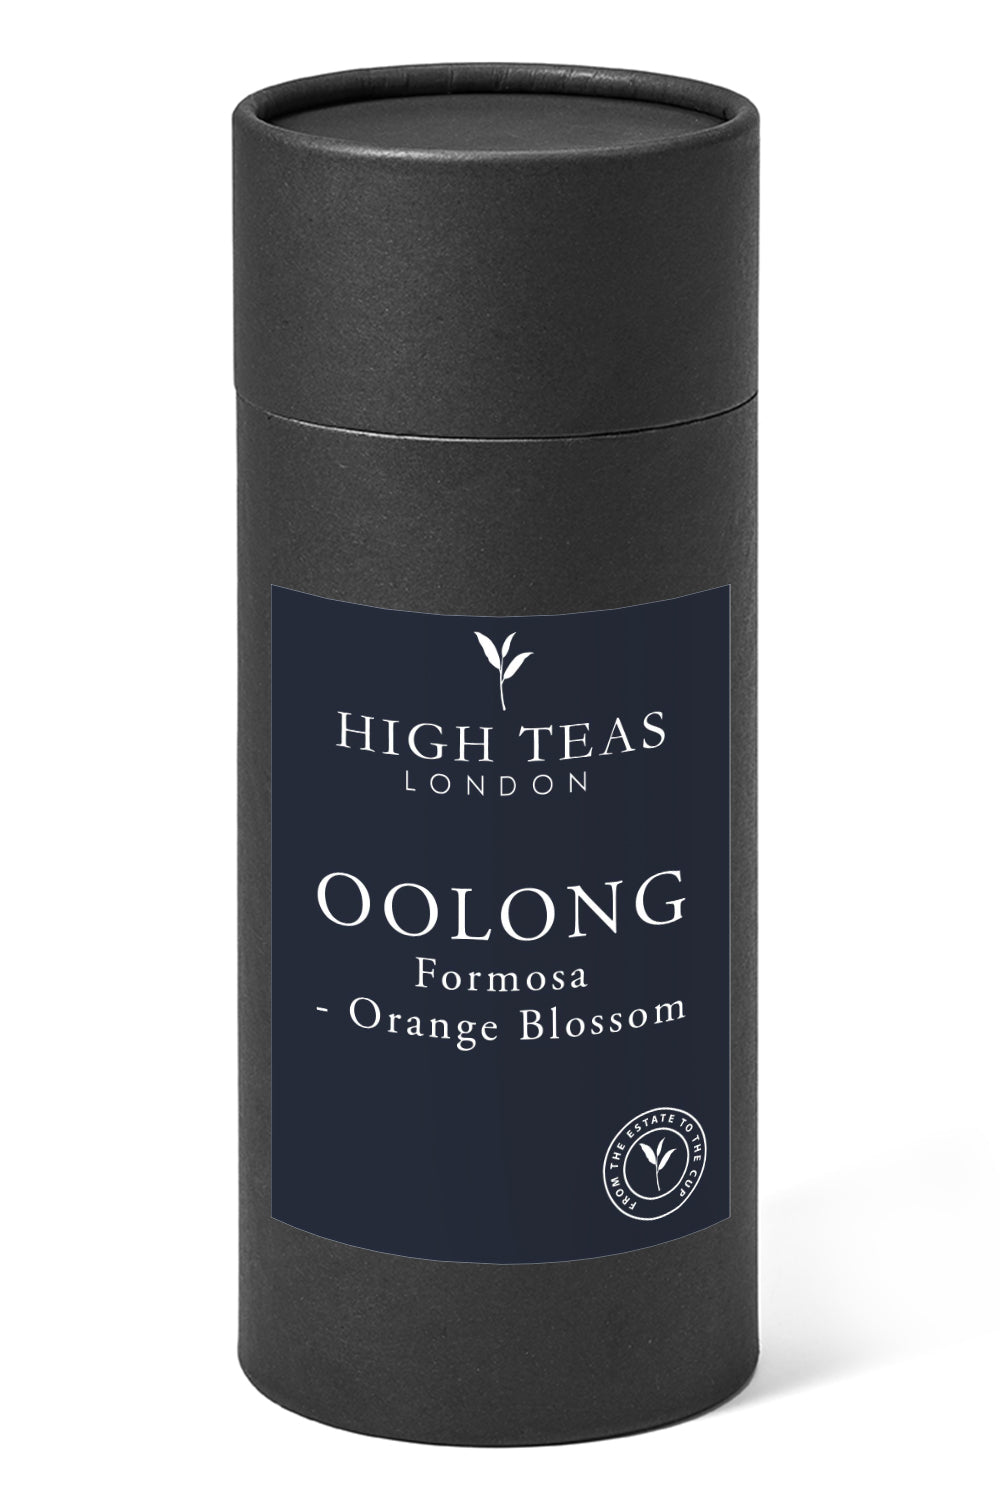 Formosa - Orange Blossom Oolong-150g gift-Loose Leaf Tea-High Teas